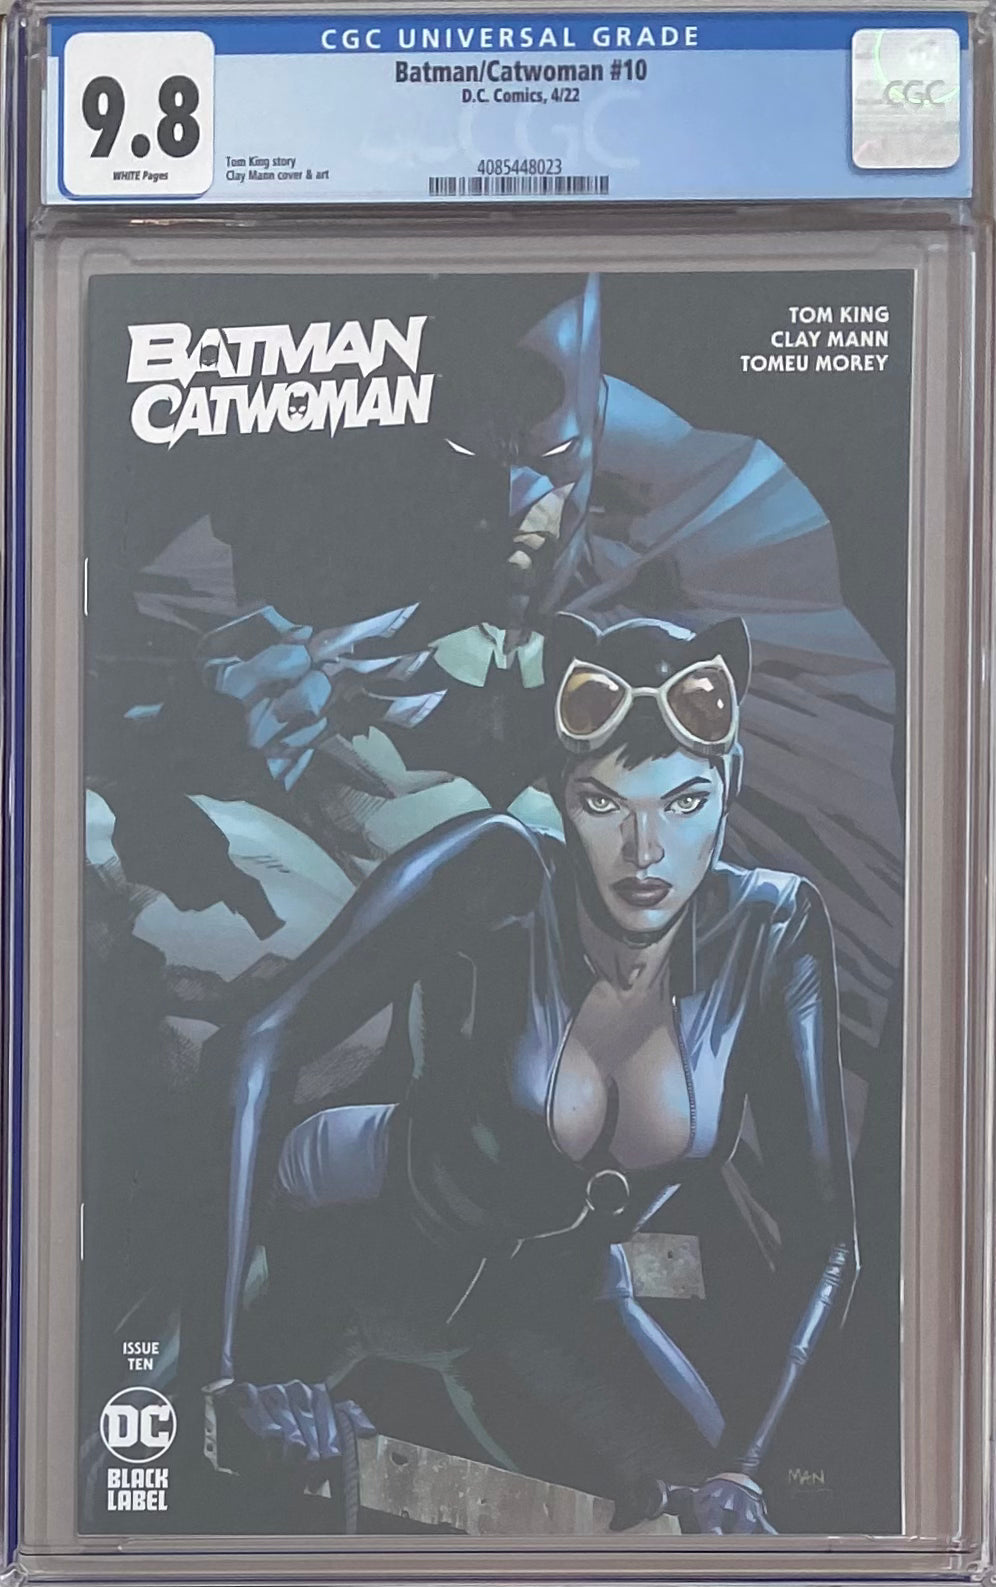 Batman Catwoman #10 DC Black Label CGC 9.8